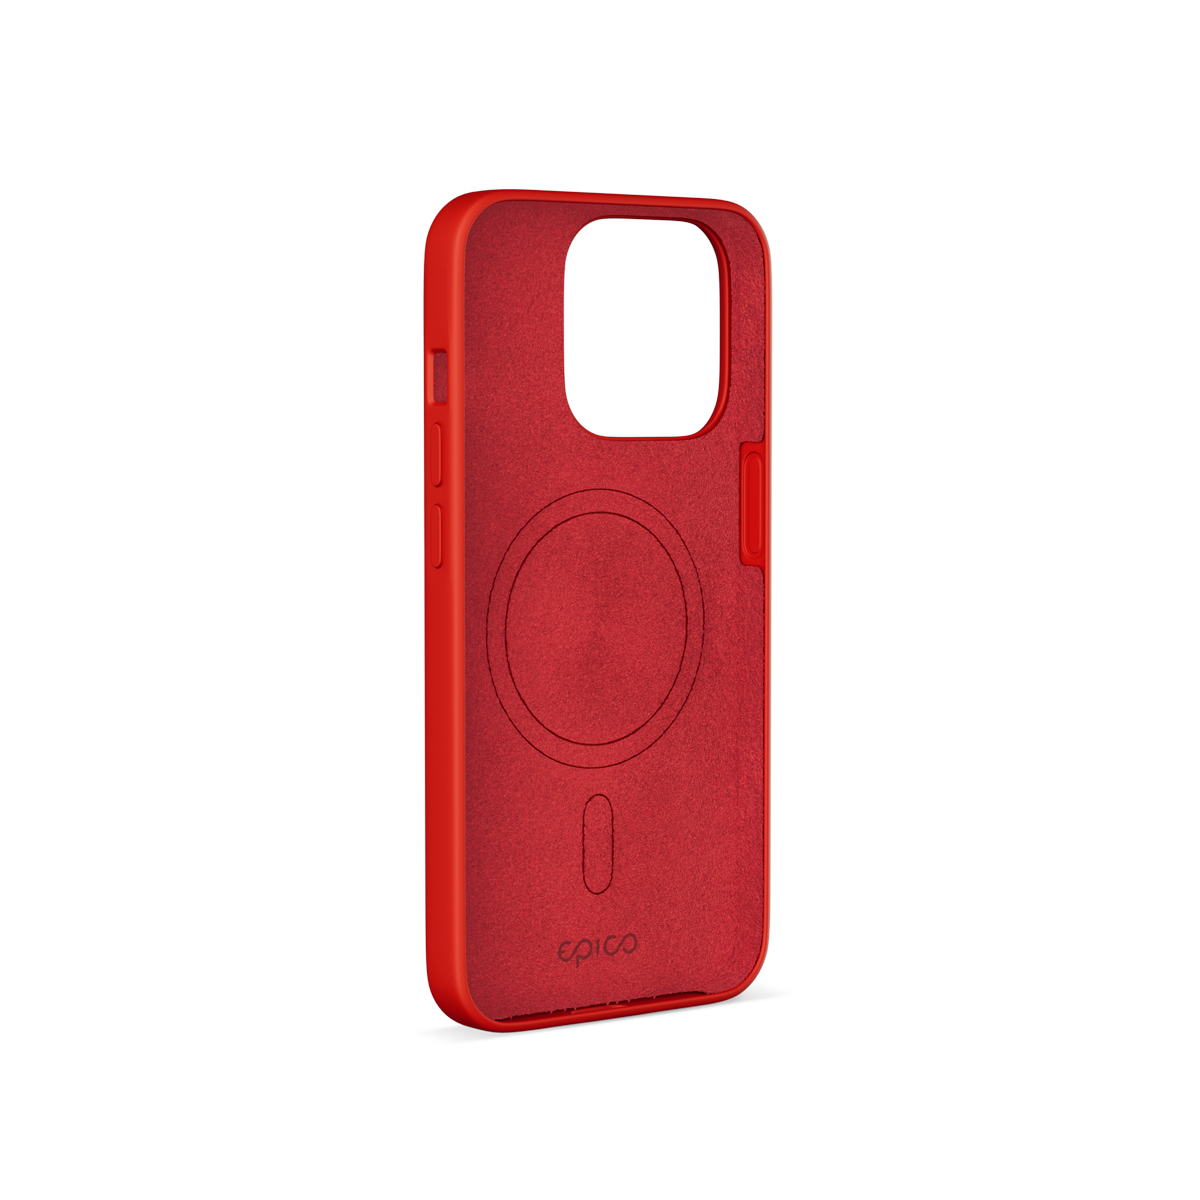 Epico Silicone Case for iPhone 12 mini - red